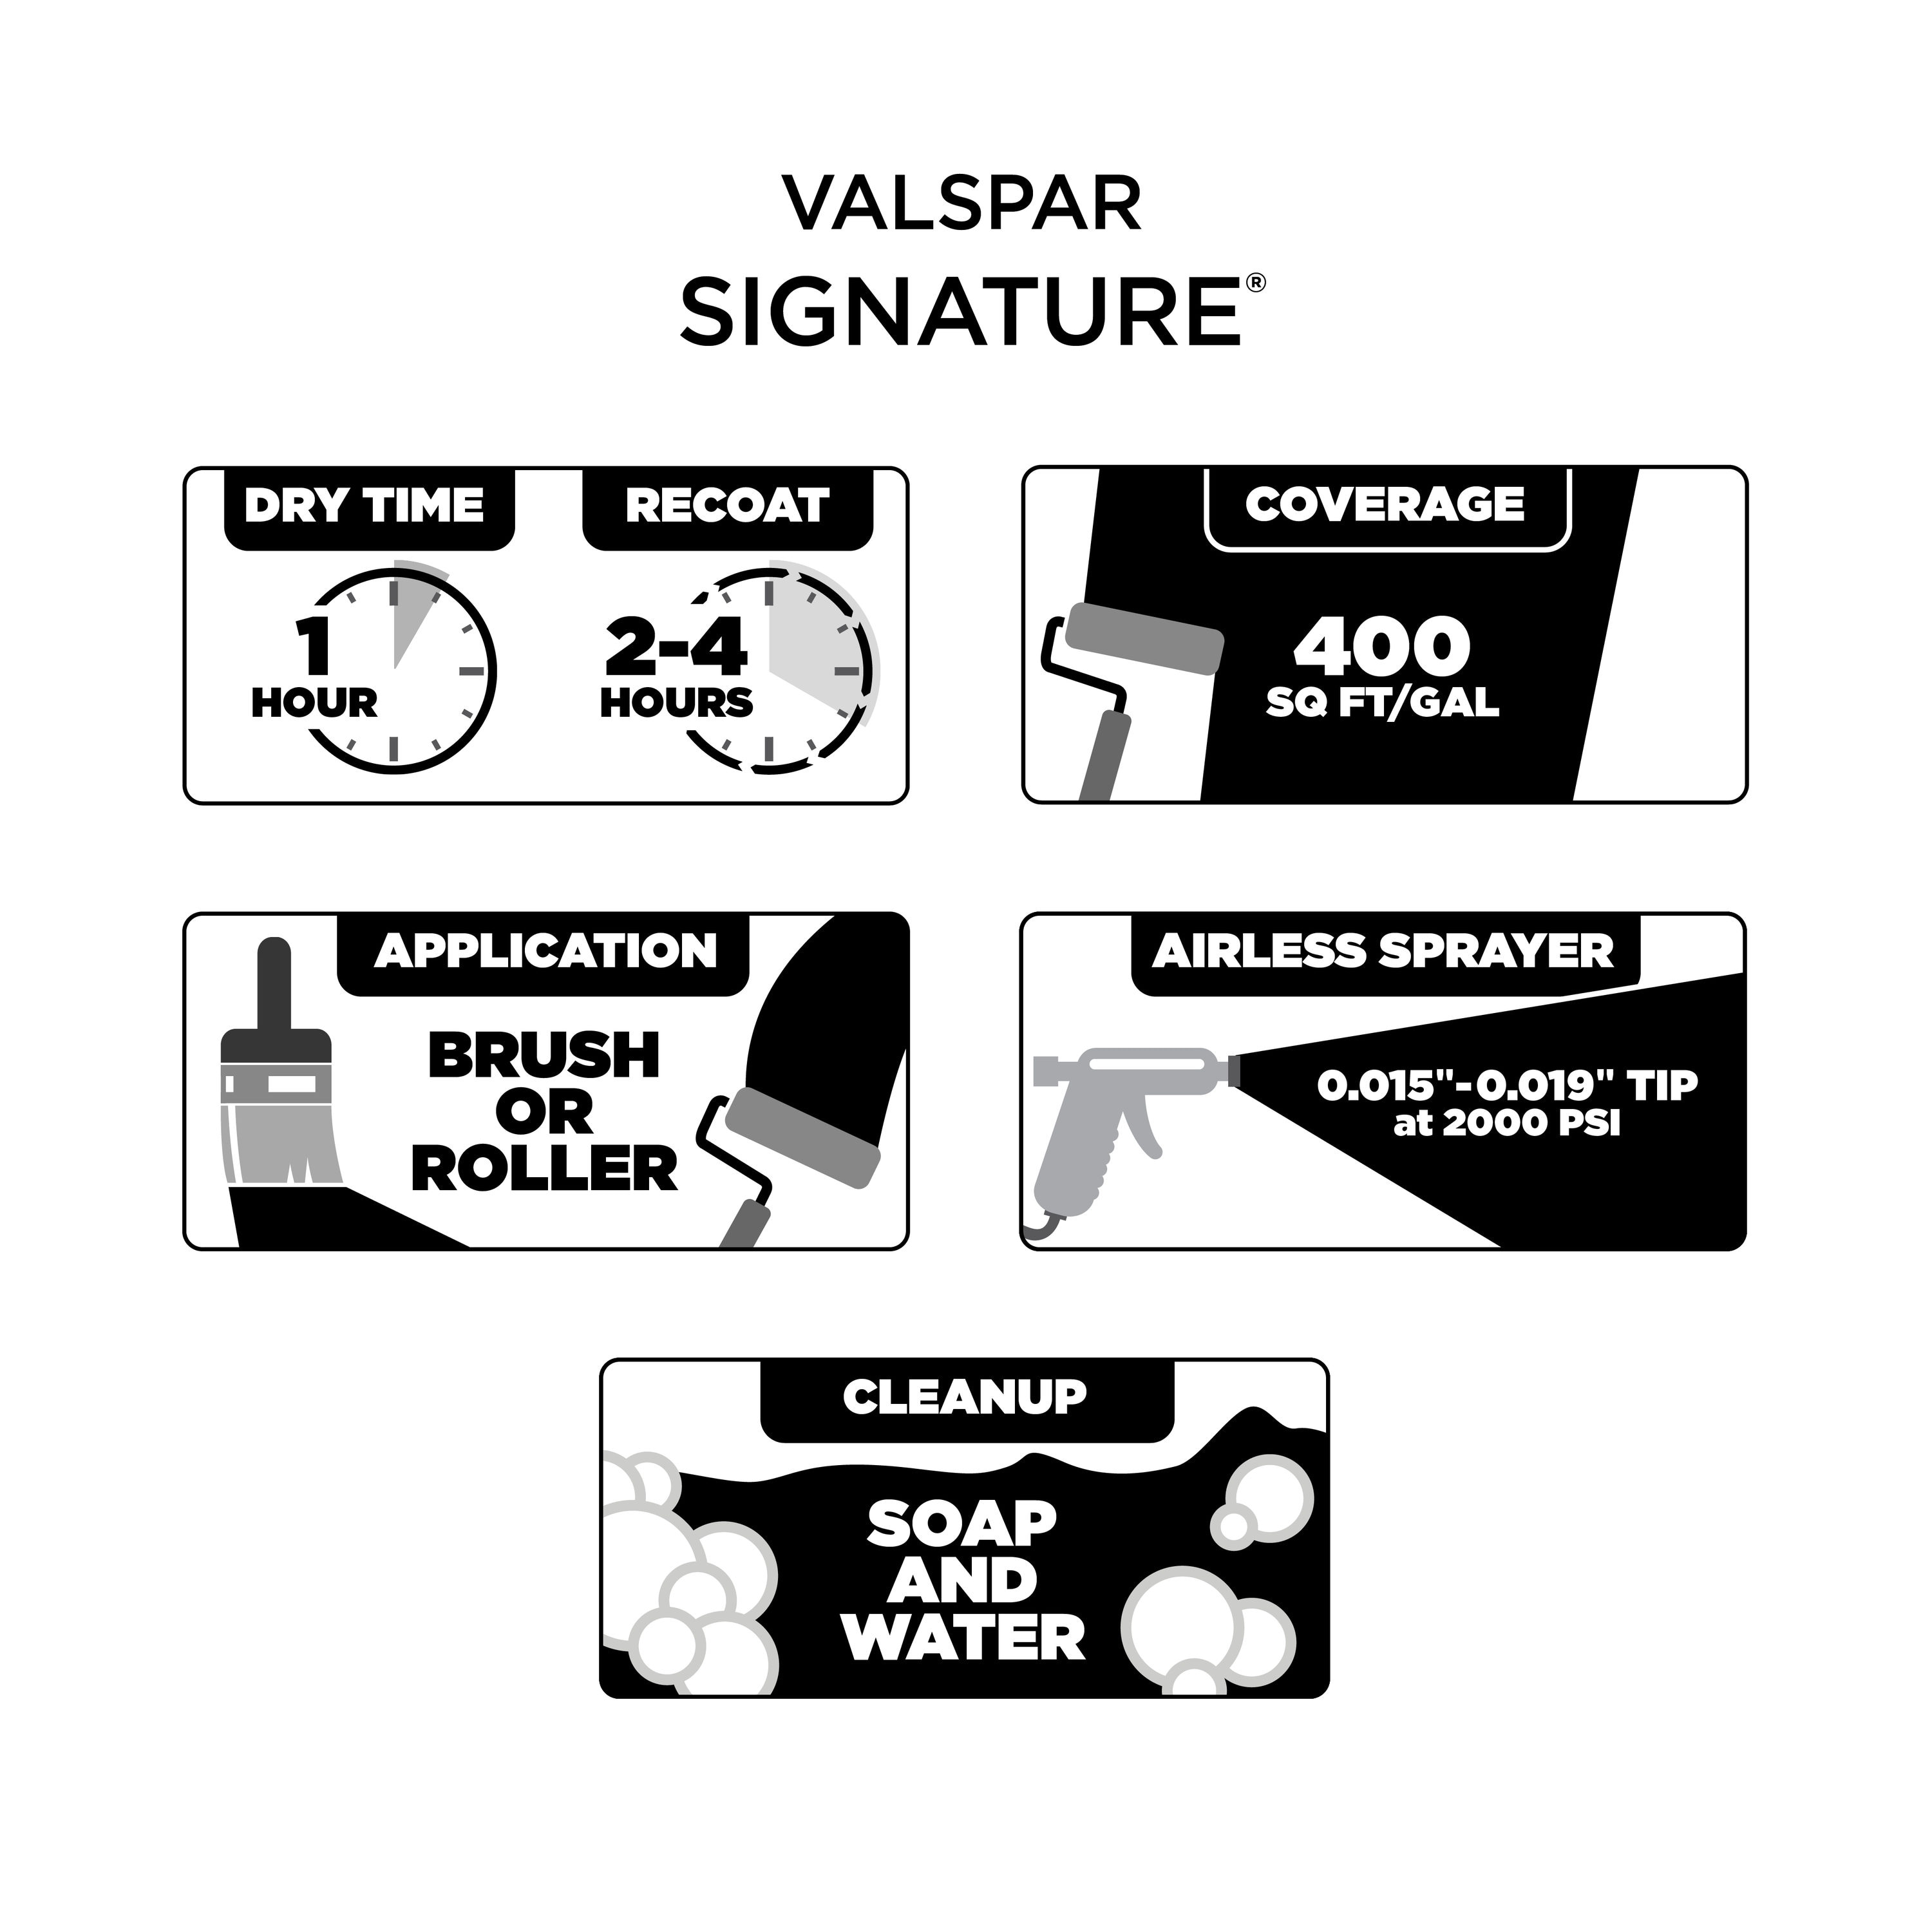 Valspar Signature Semi-gloss Ultra White Tintable Latex Interior Paint +  Primer (1-quart) in the Interior Paint department at